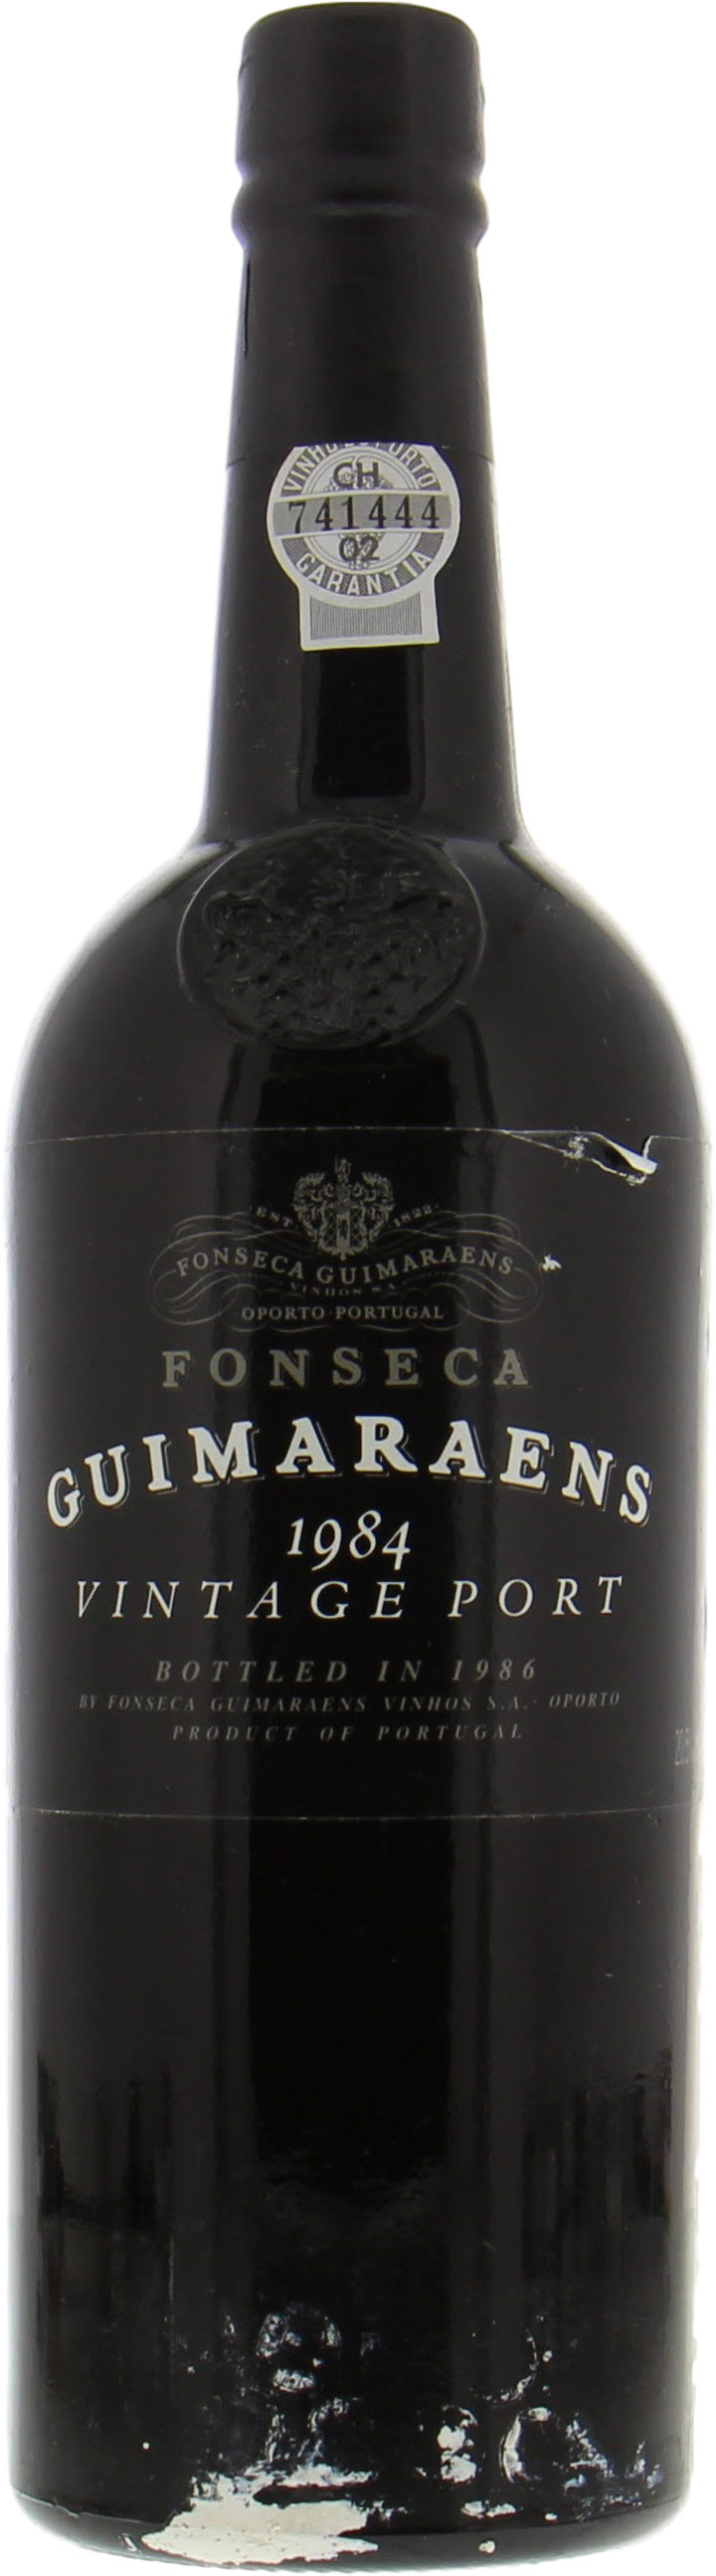 Fonseca - Vintage Port 1984 Perfect